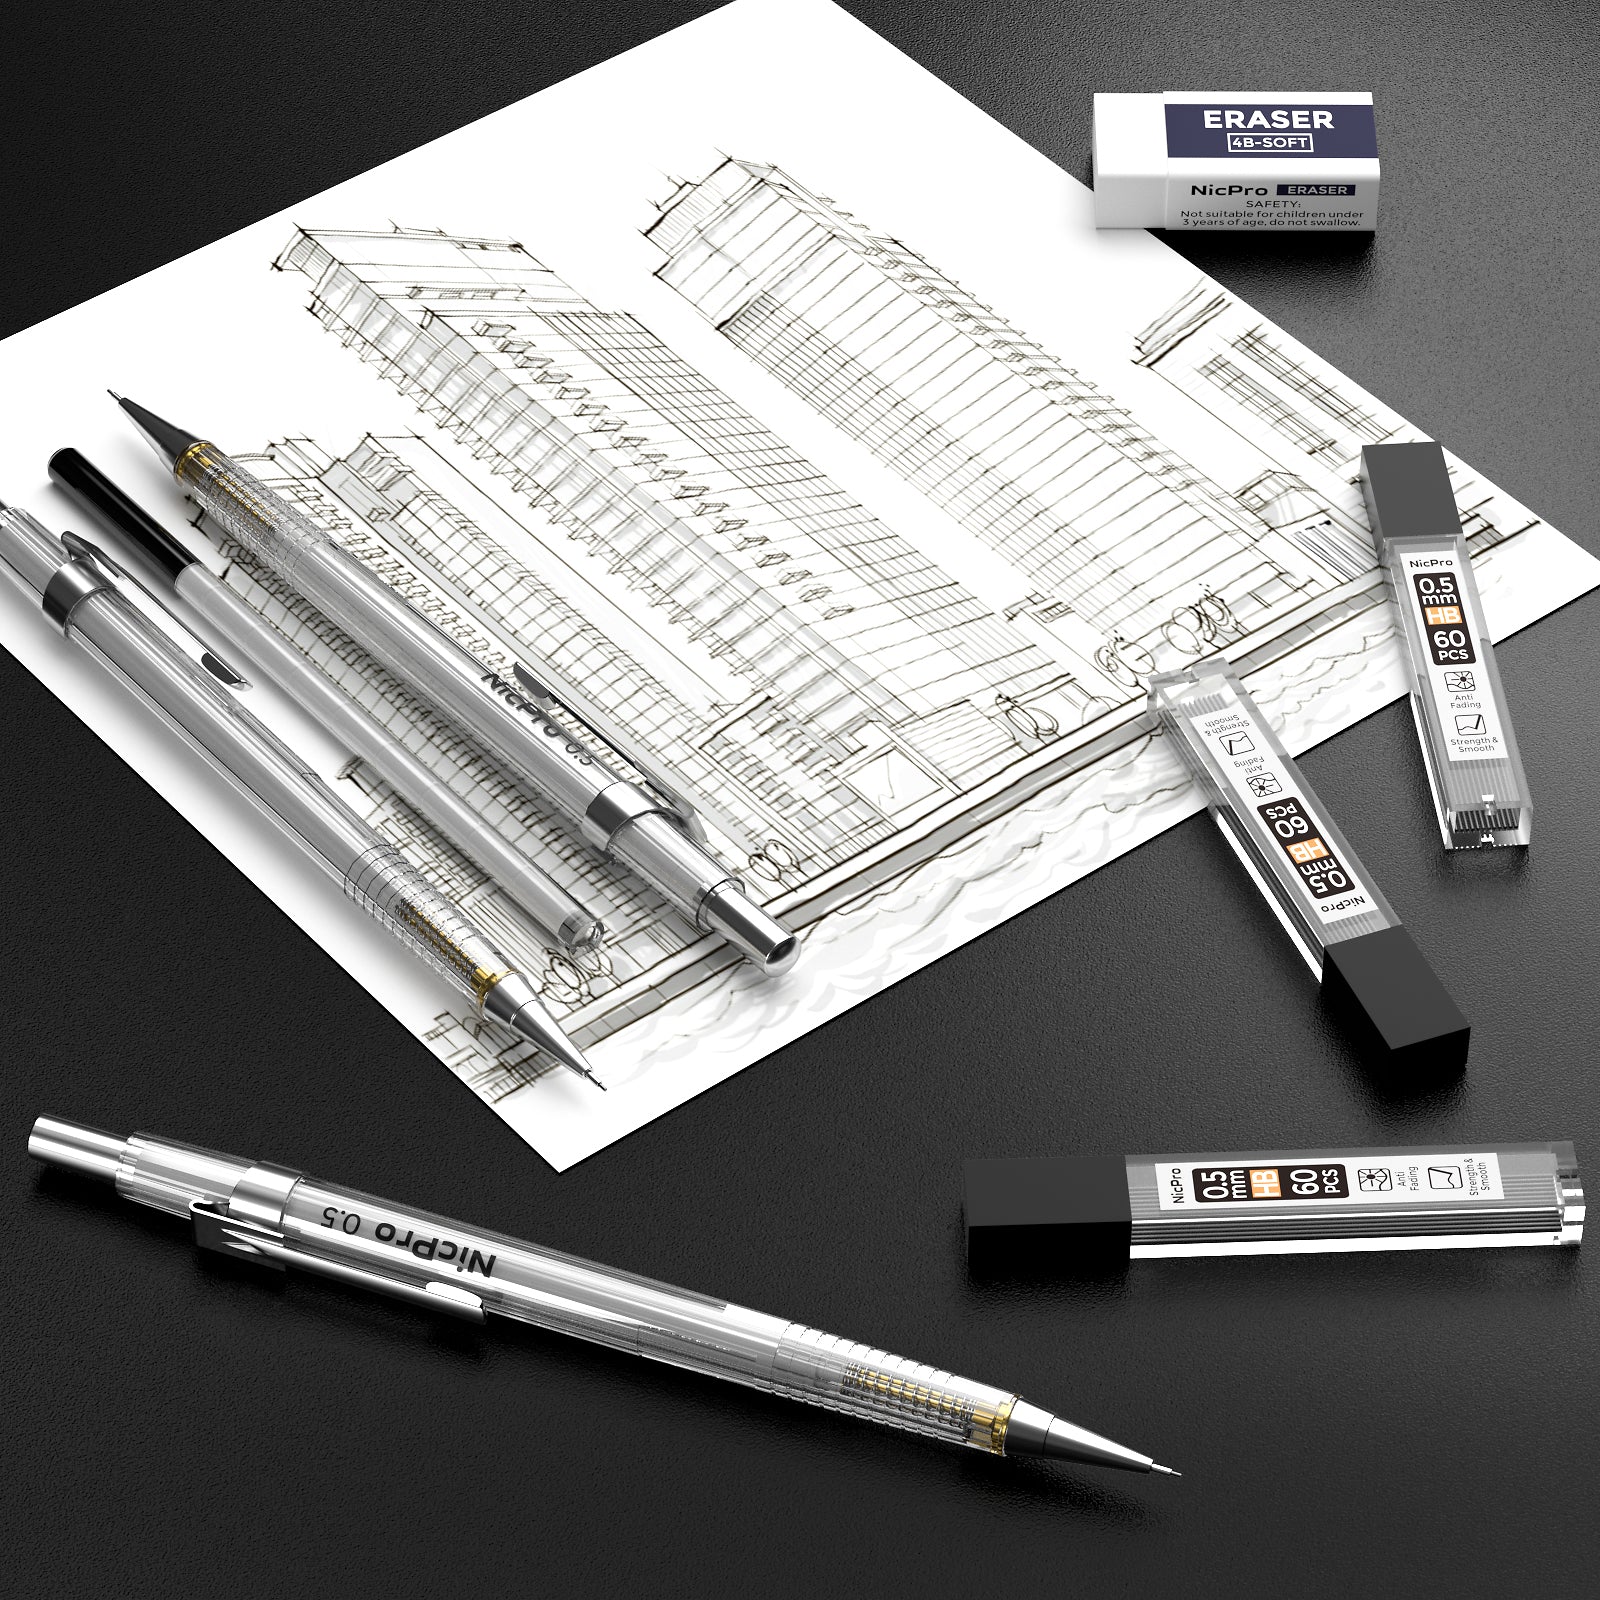 Nicpro Mechanical Pencils Set, 3PCS Mechanical Pencil 0.5 with 3 Tubes HB  Lead Pencil 0.5mm,1 PCS Eraser & 9 PCS Eraser Refill, White Drafting Pencil